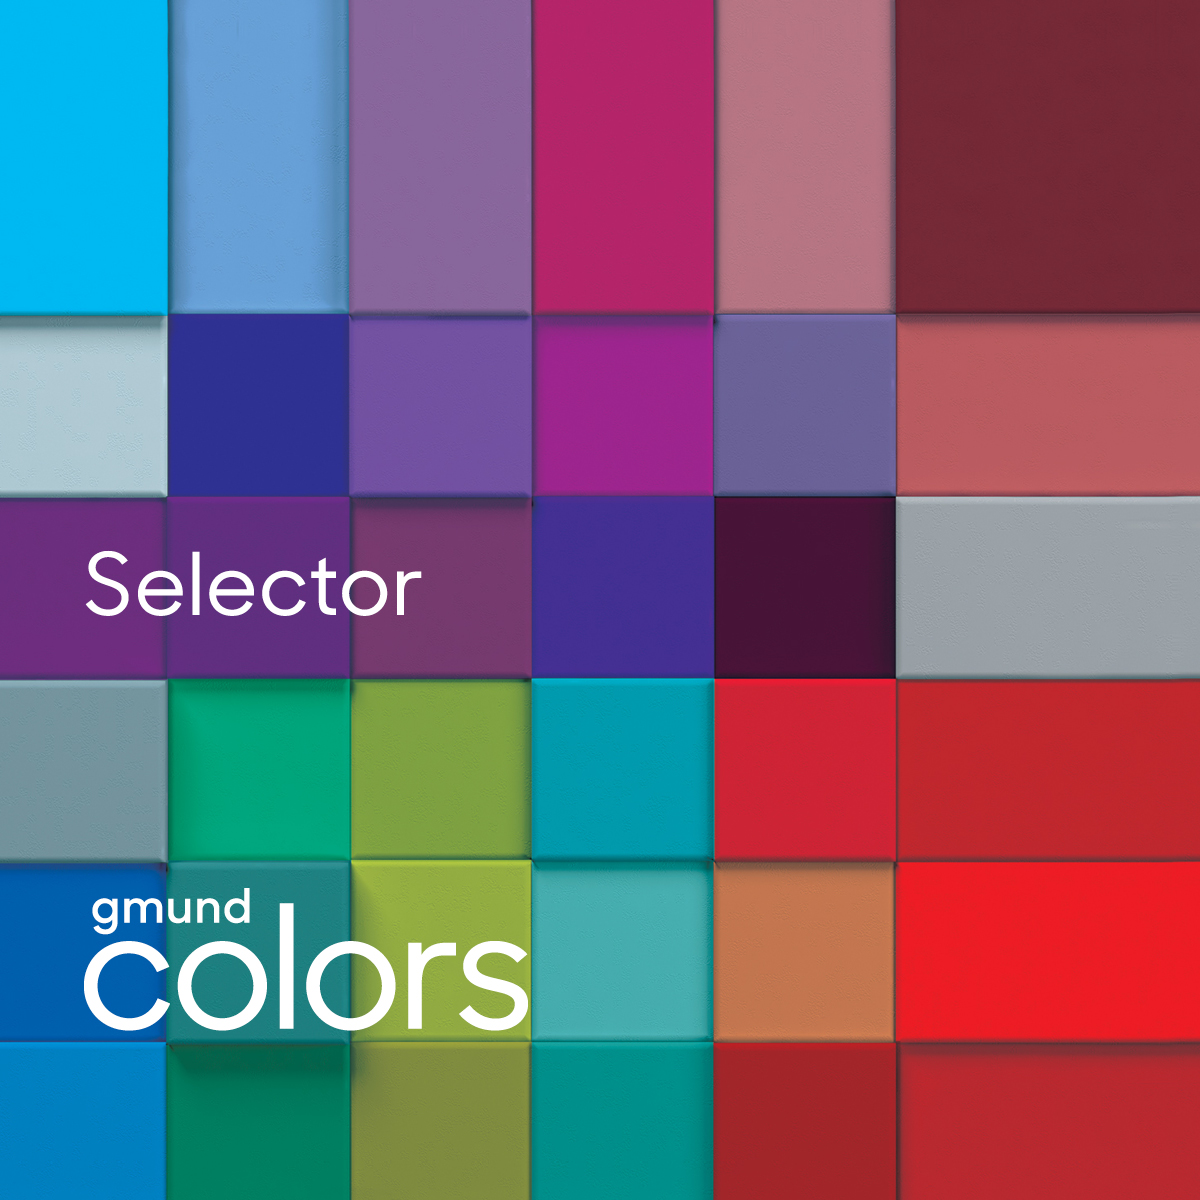 Gmund Colors Matt - Gmund Colors Selector